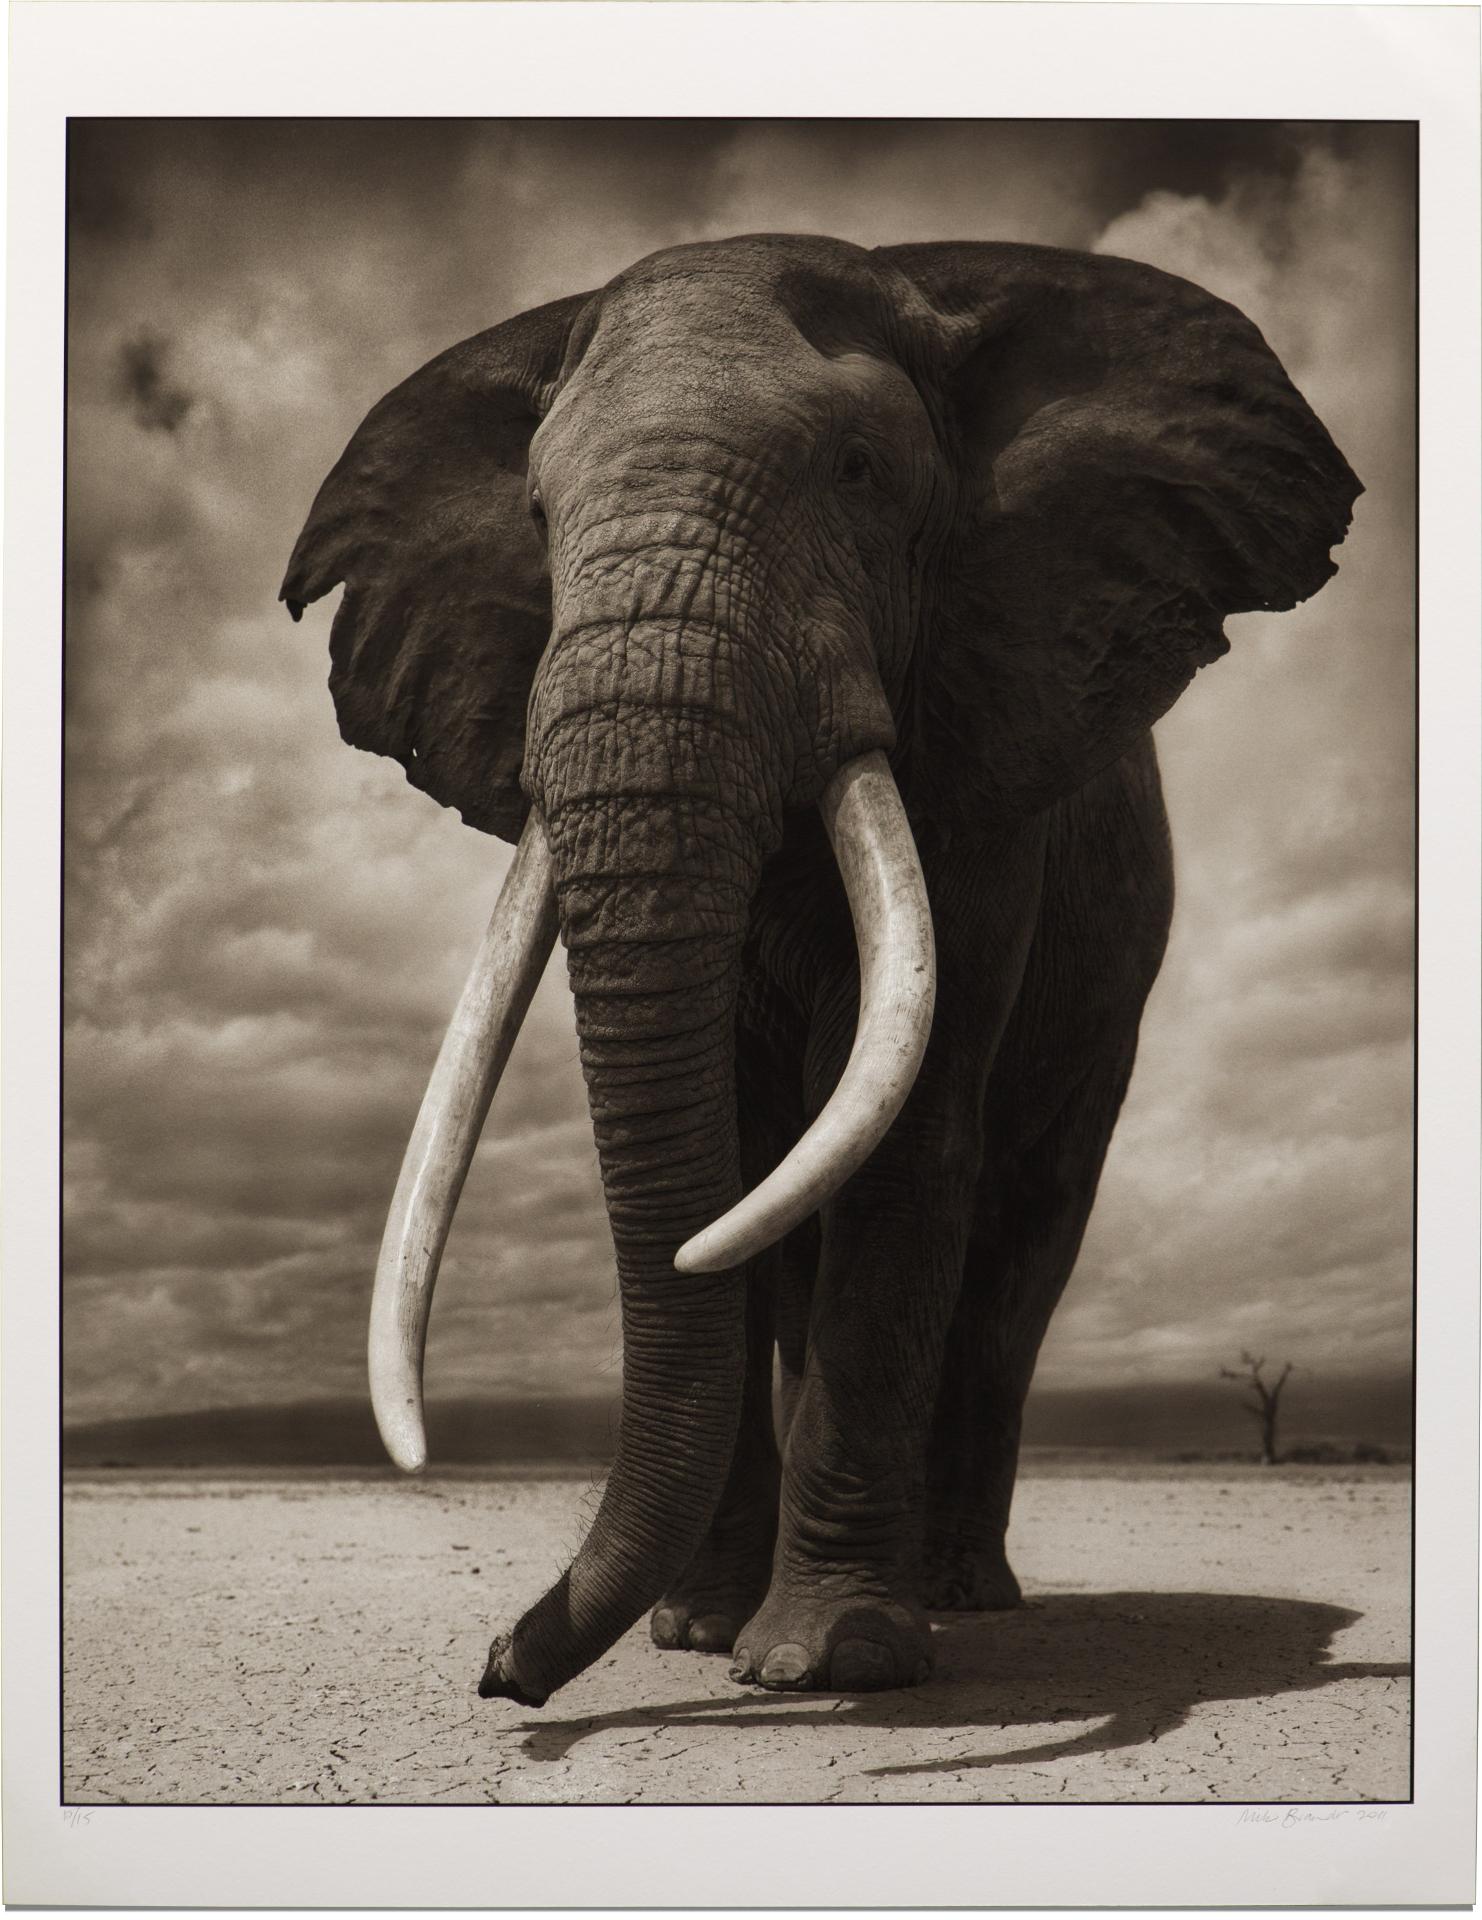 Nick Brandt (1964) - Portrait of an Elephant on Bare Earth